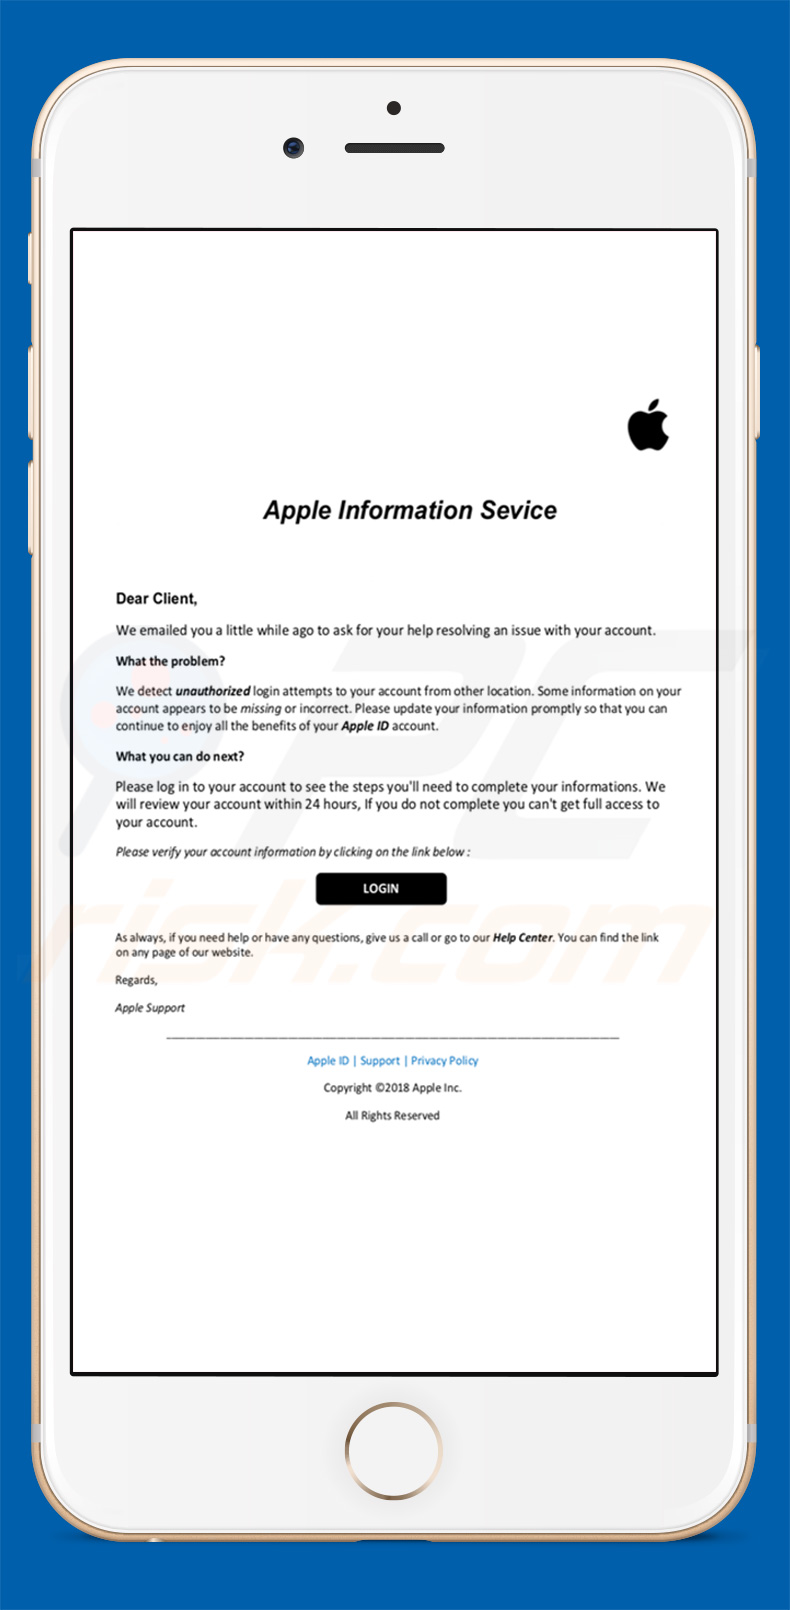 Apple Email Virus robando cuentas